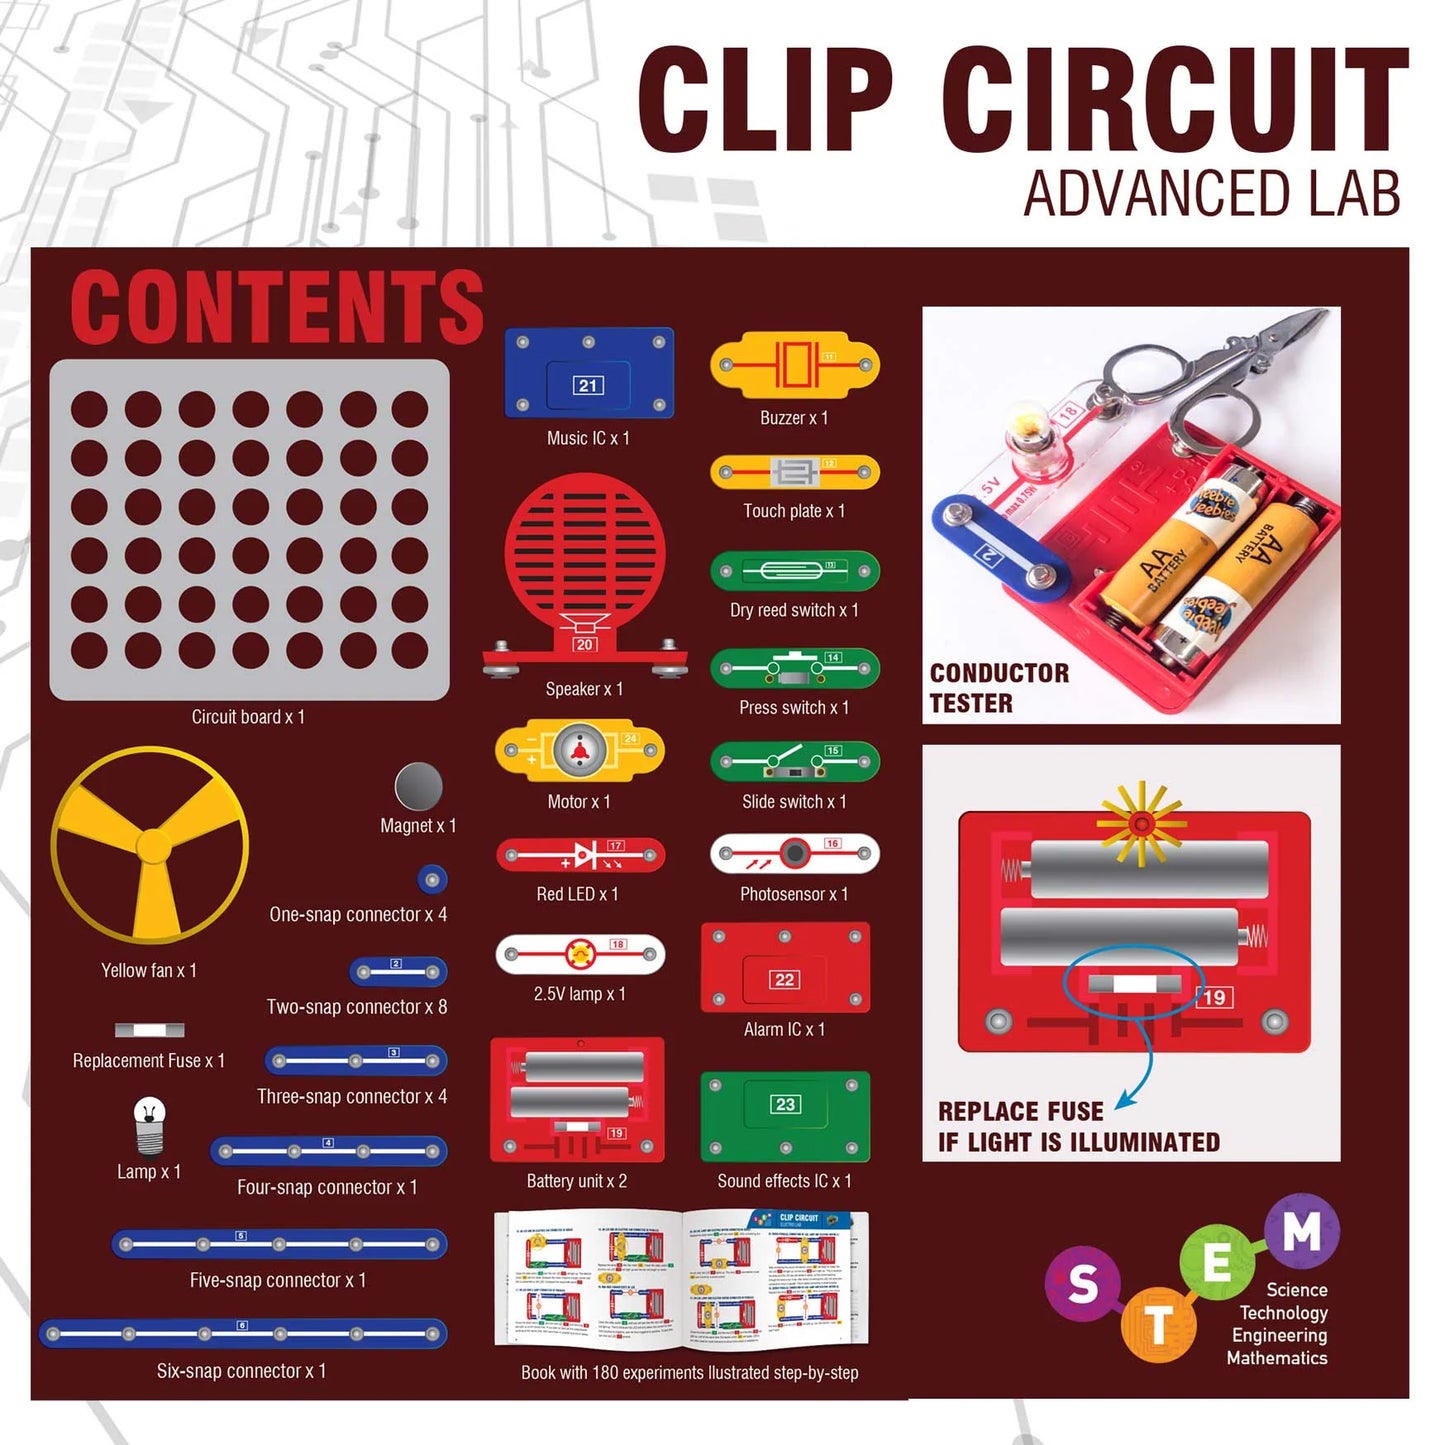 Clip Circuit Advanced Lab 180 STEM Electronic Experiments Kit